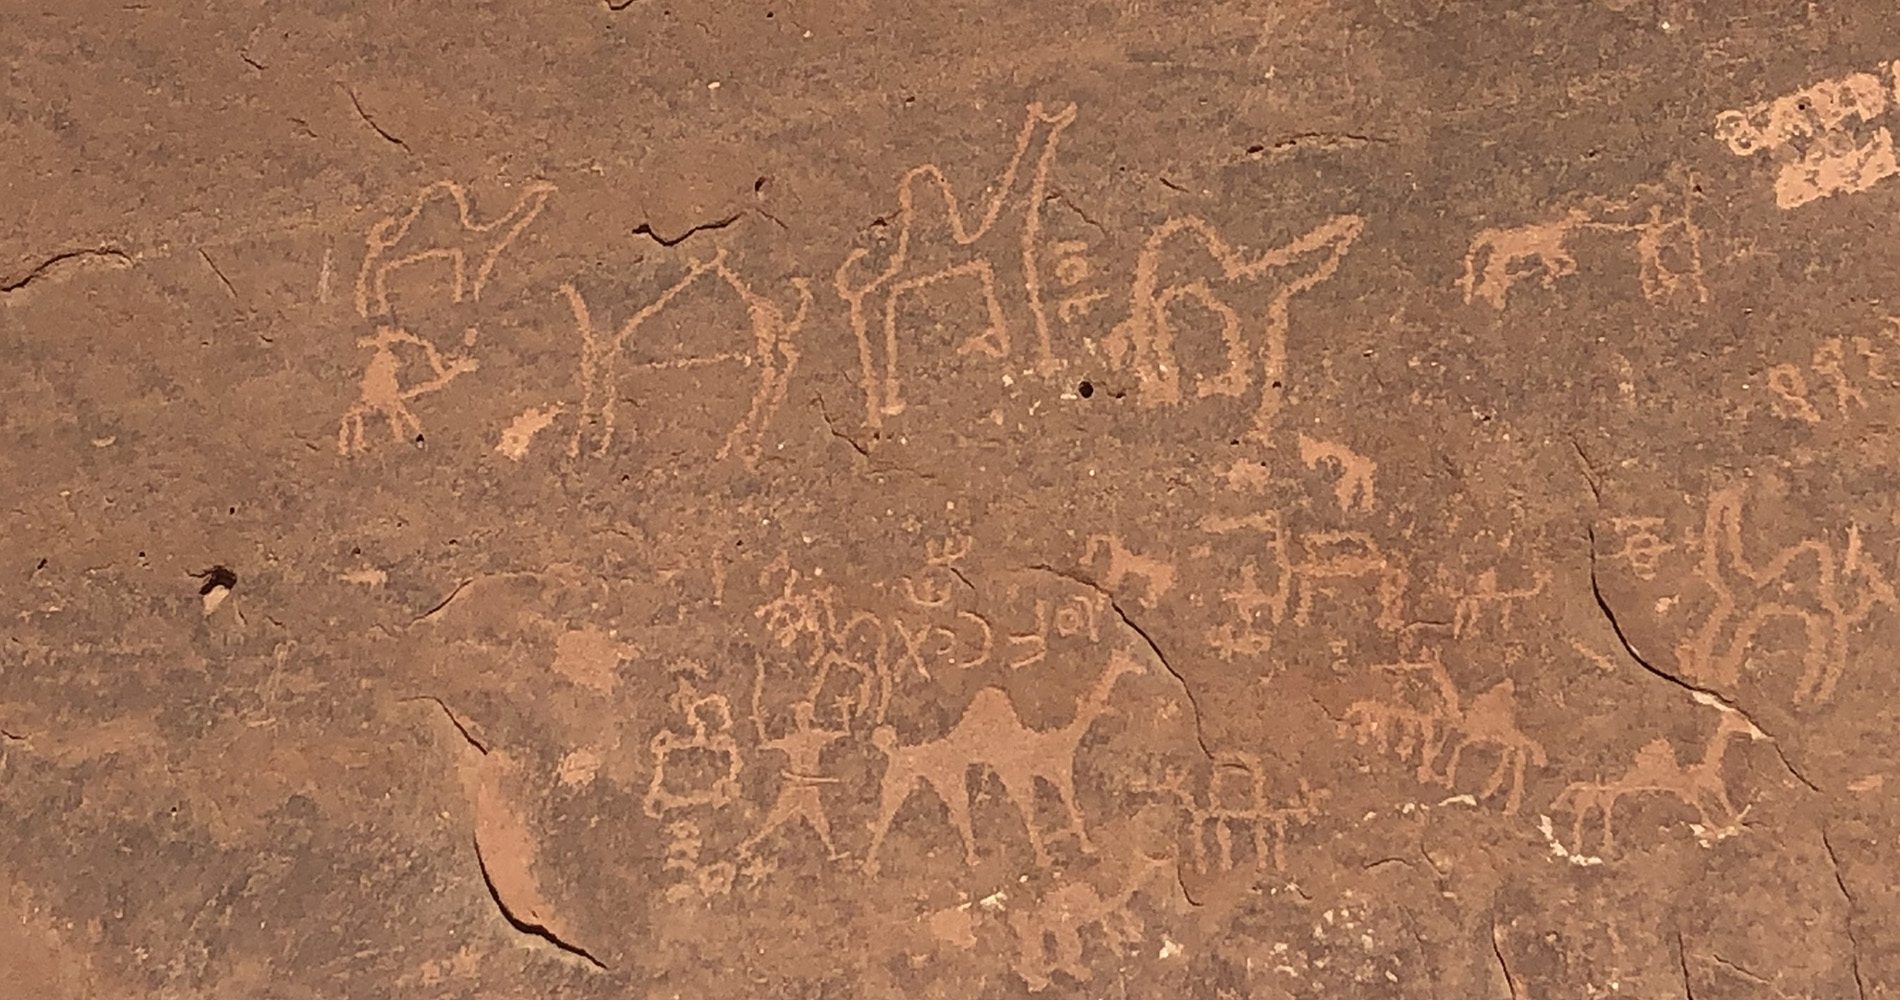 Wadi rum inscriptions rupestres dAnfashieh